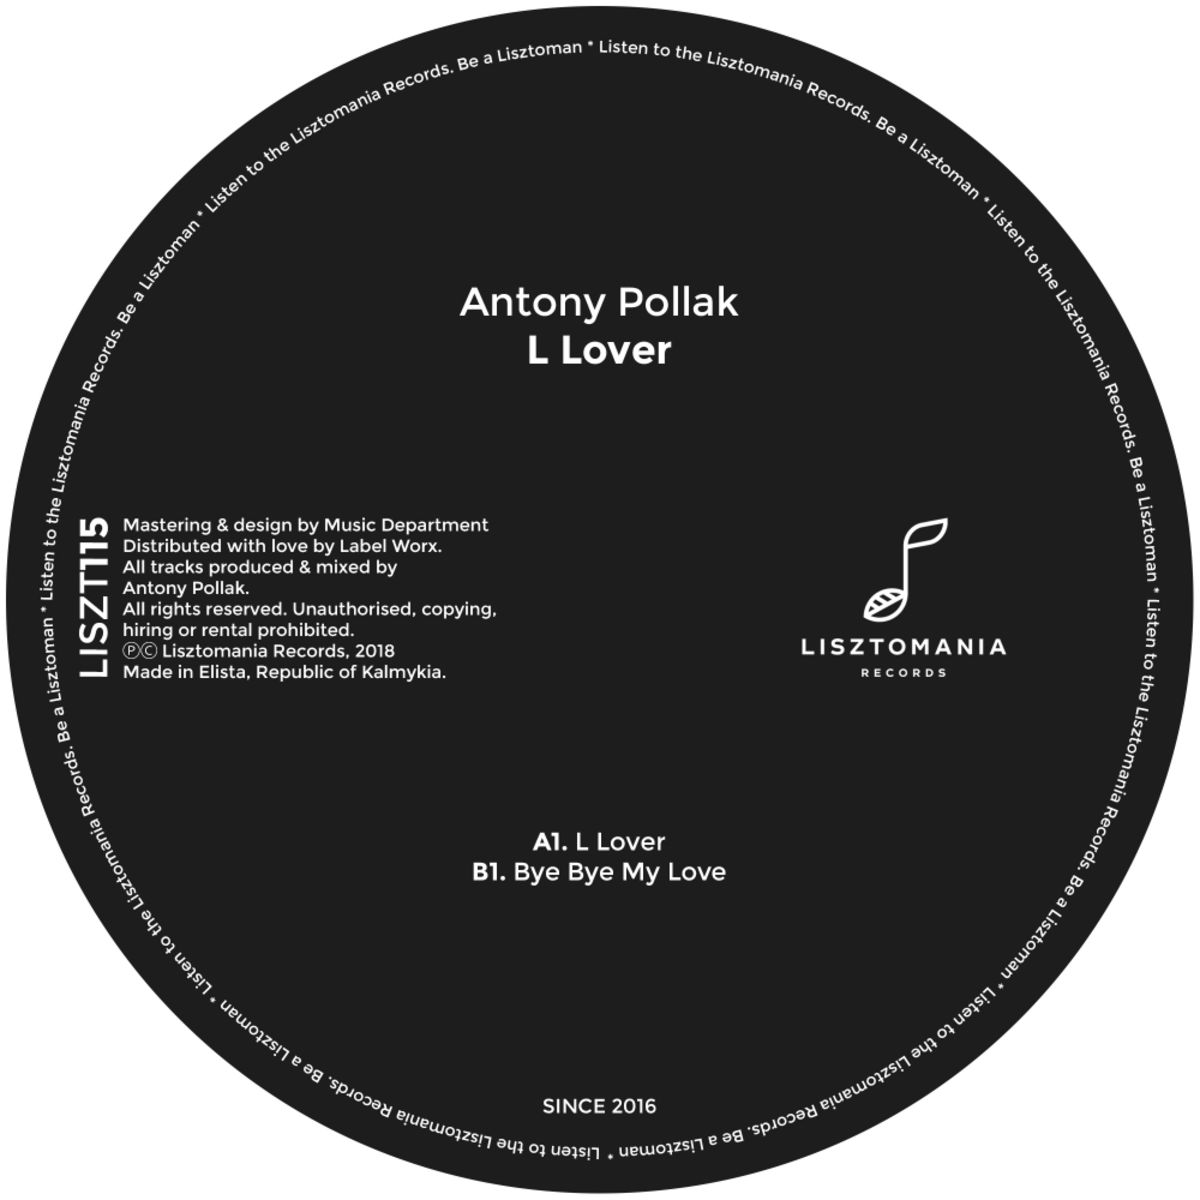 Antony Pollak - L Lover / Lisztomania Records